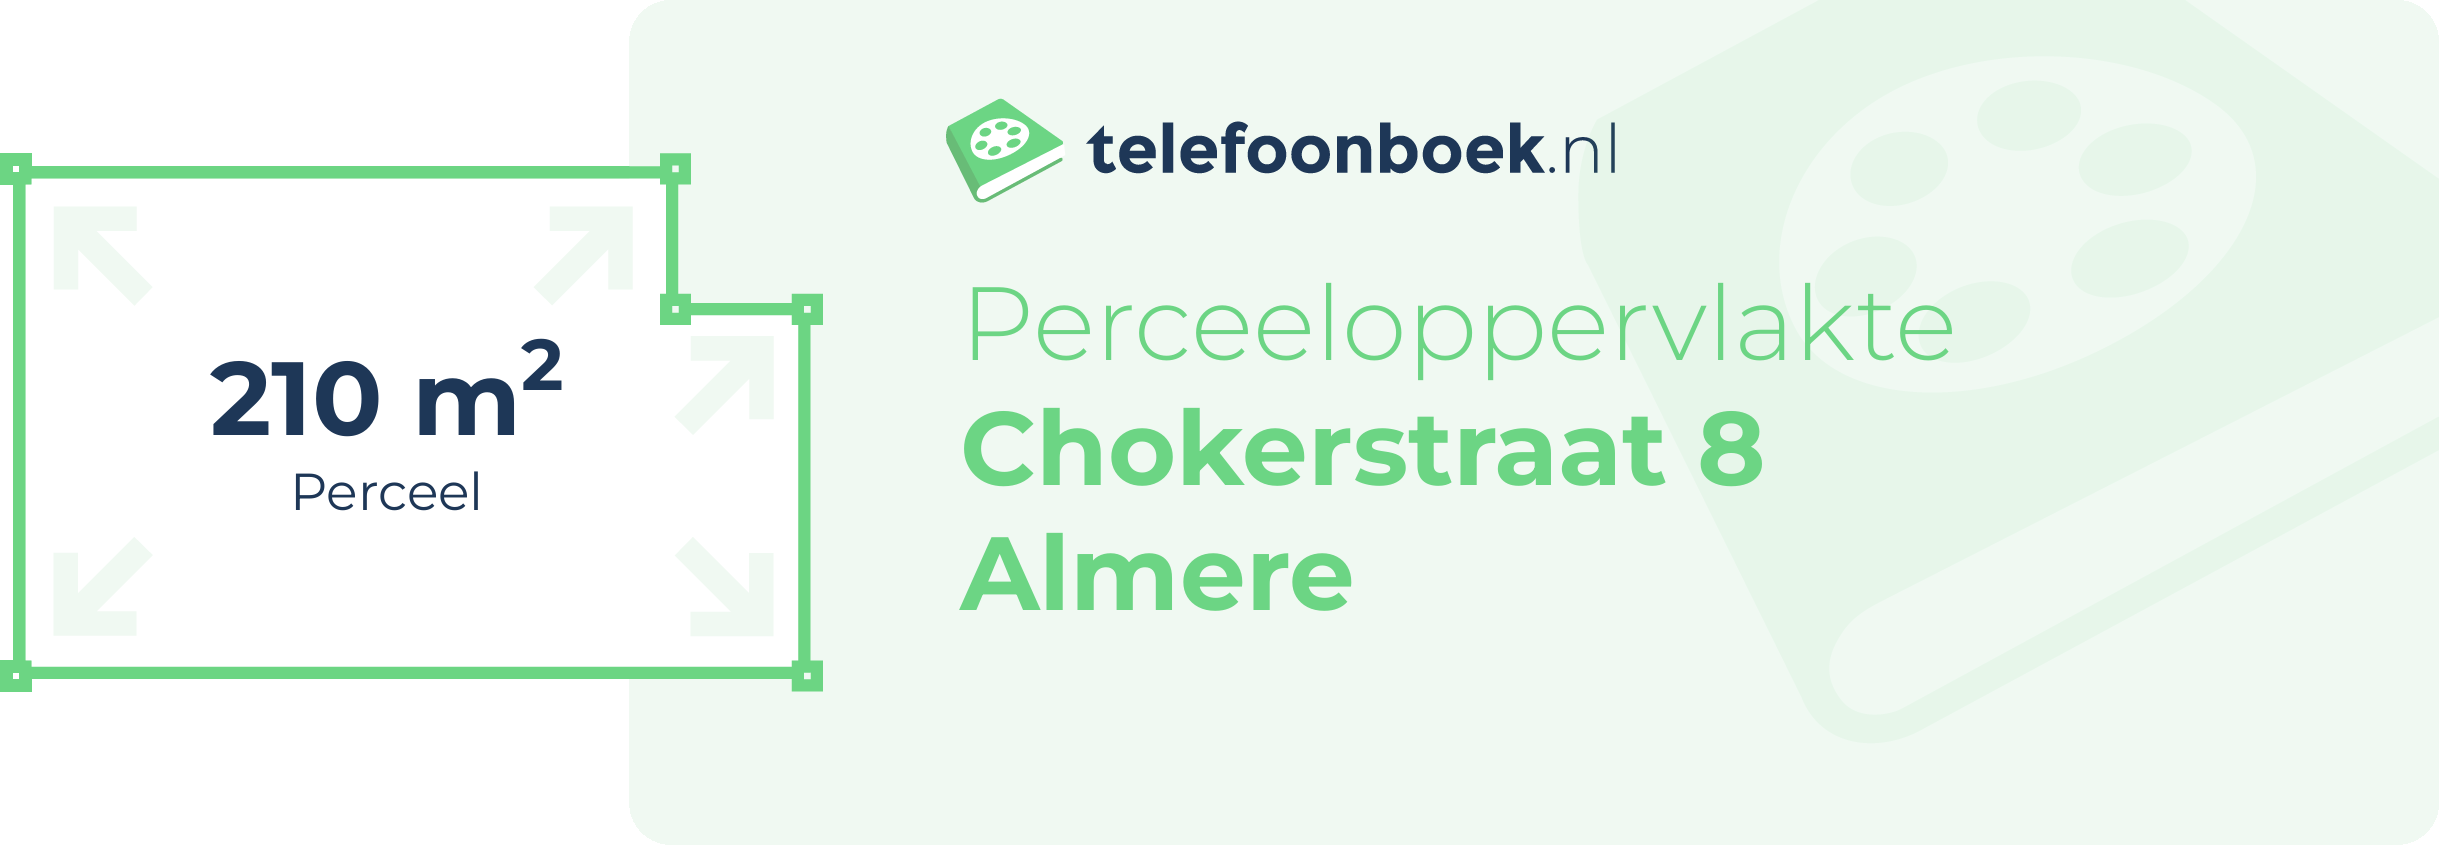 Perceeloppervlakte Chokerstraat 8 Almere